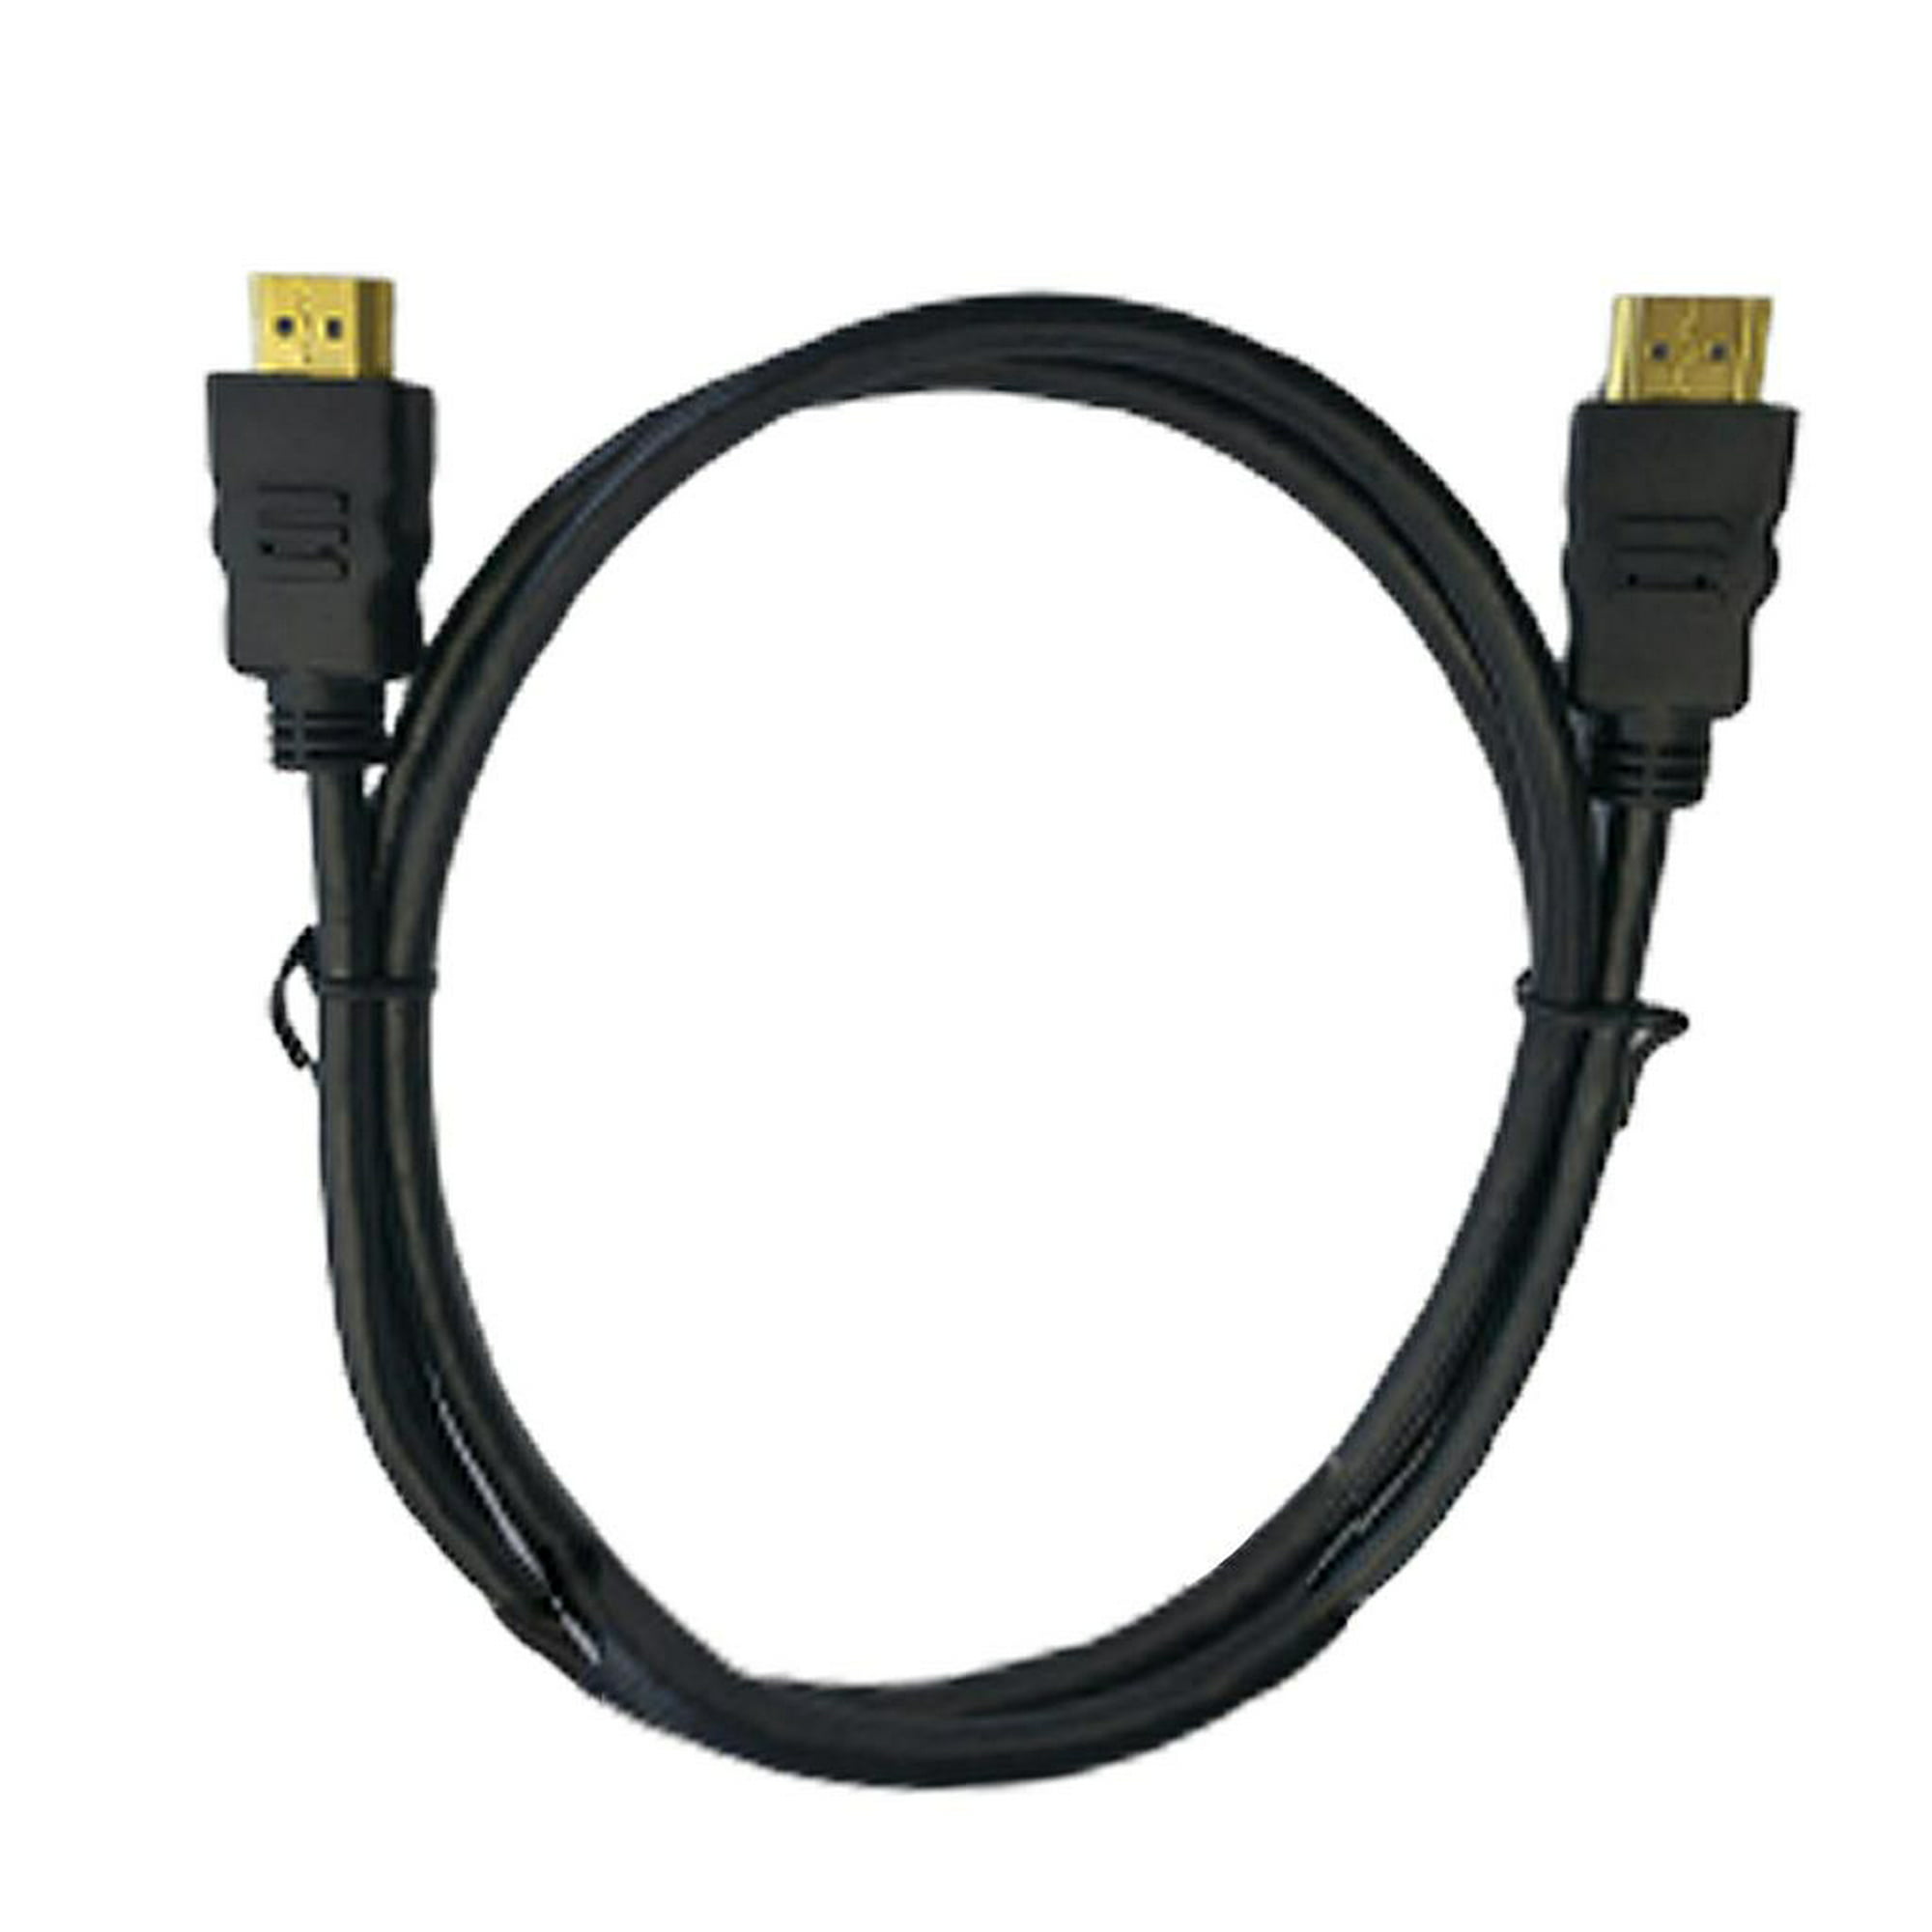 Cable VGA a HDMI, 1080P VGA a HDMI Cable adaptador para proyector de  monitor de computadora portátil, 5.9 ft/5.9 pies de repuesto de cable  convertidor